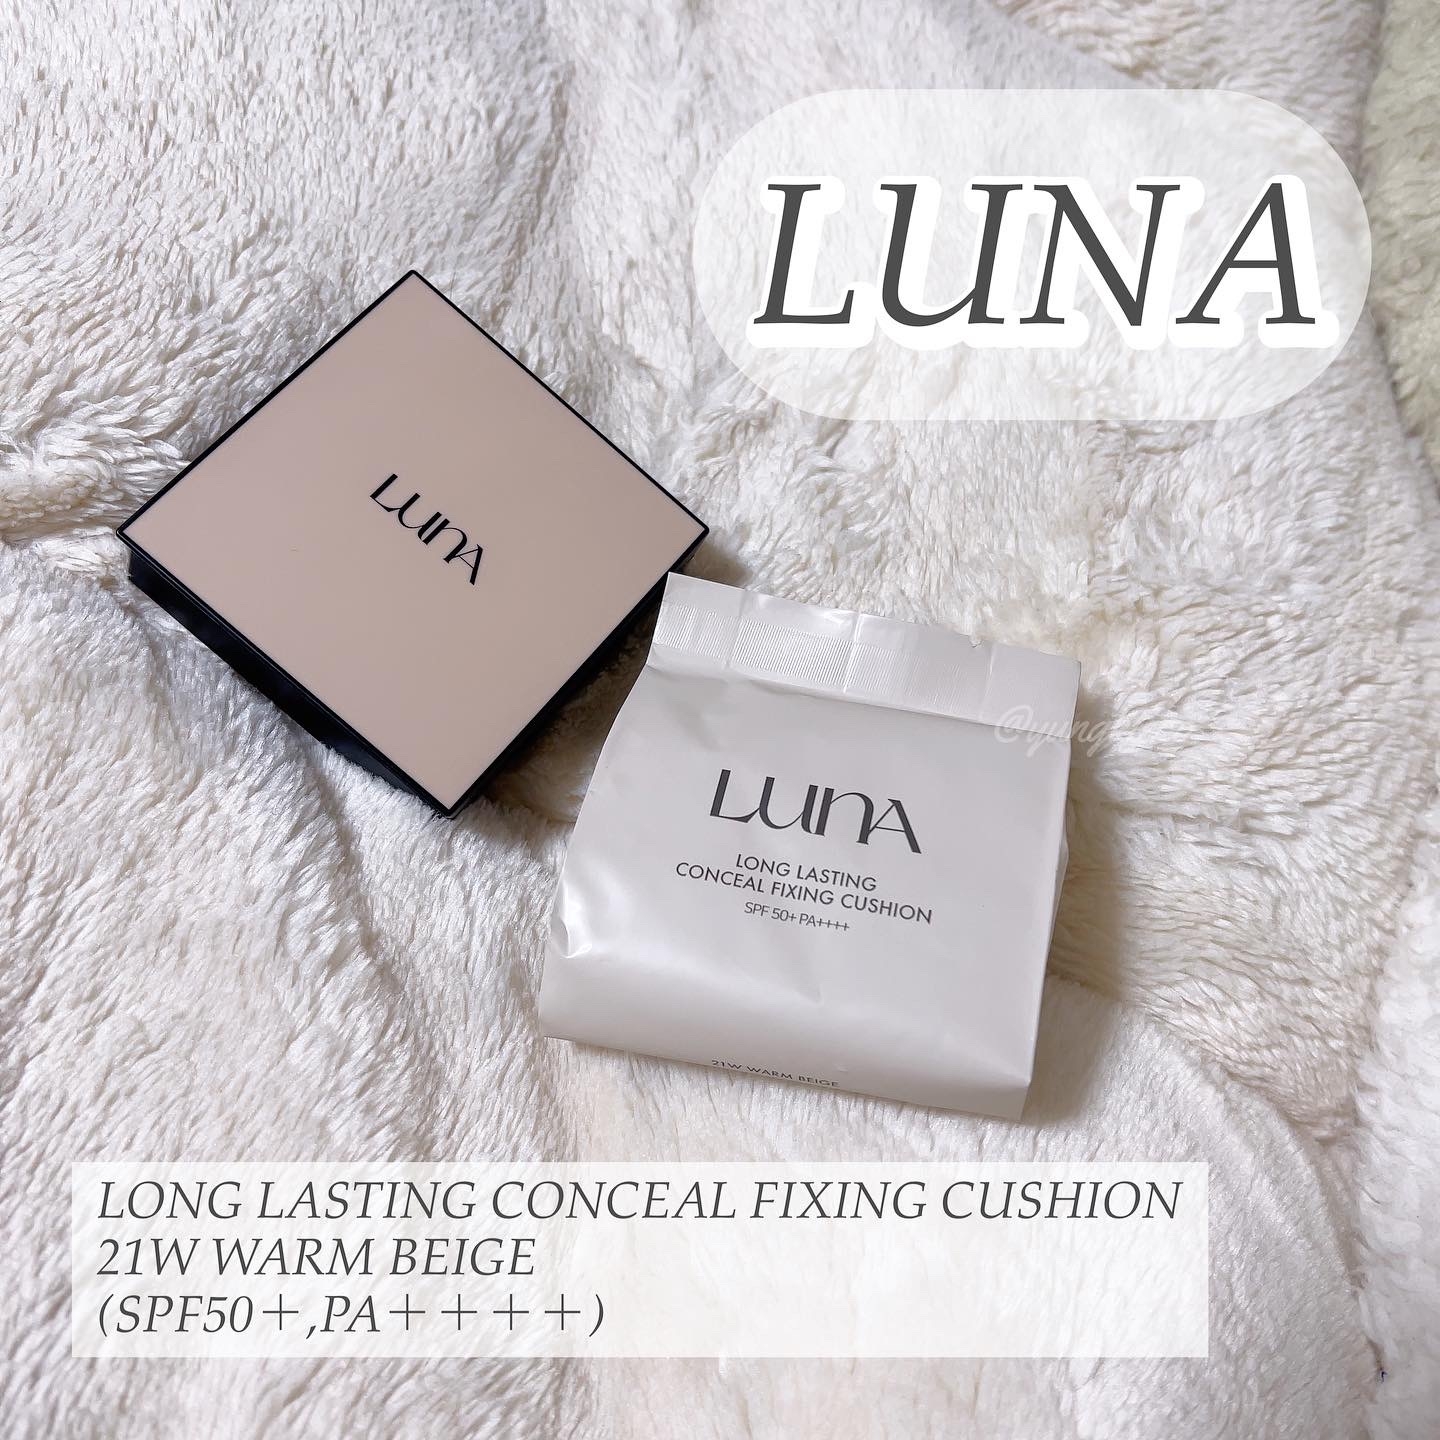 LUNAlong lasting conceal fixing cushionを使ったyungさんのクチコミ画像1